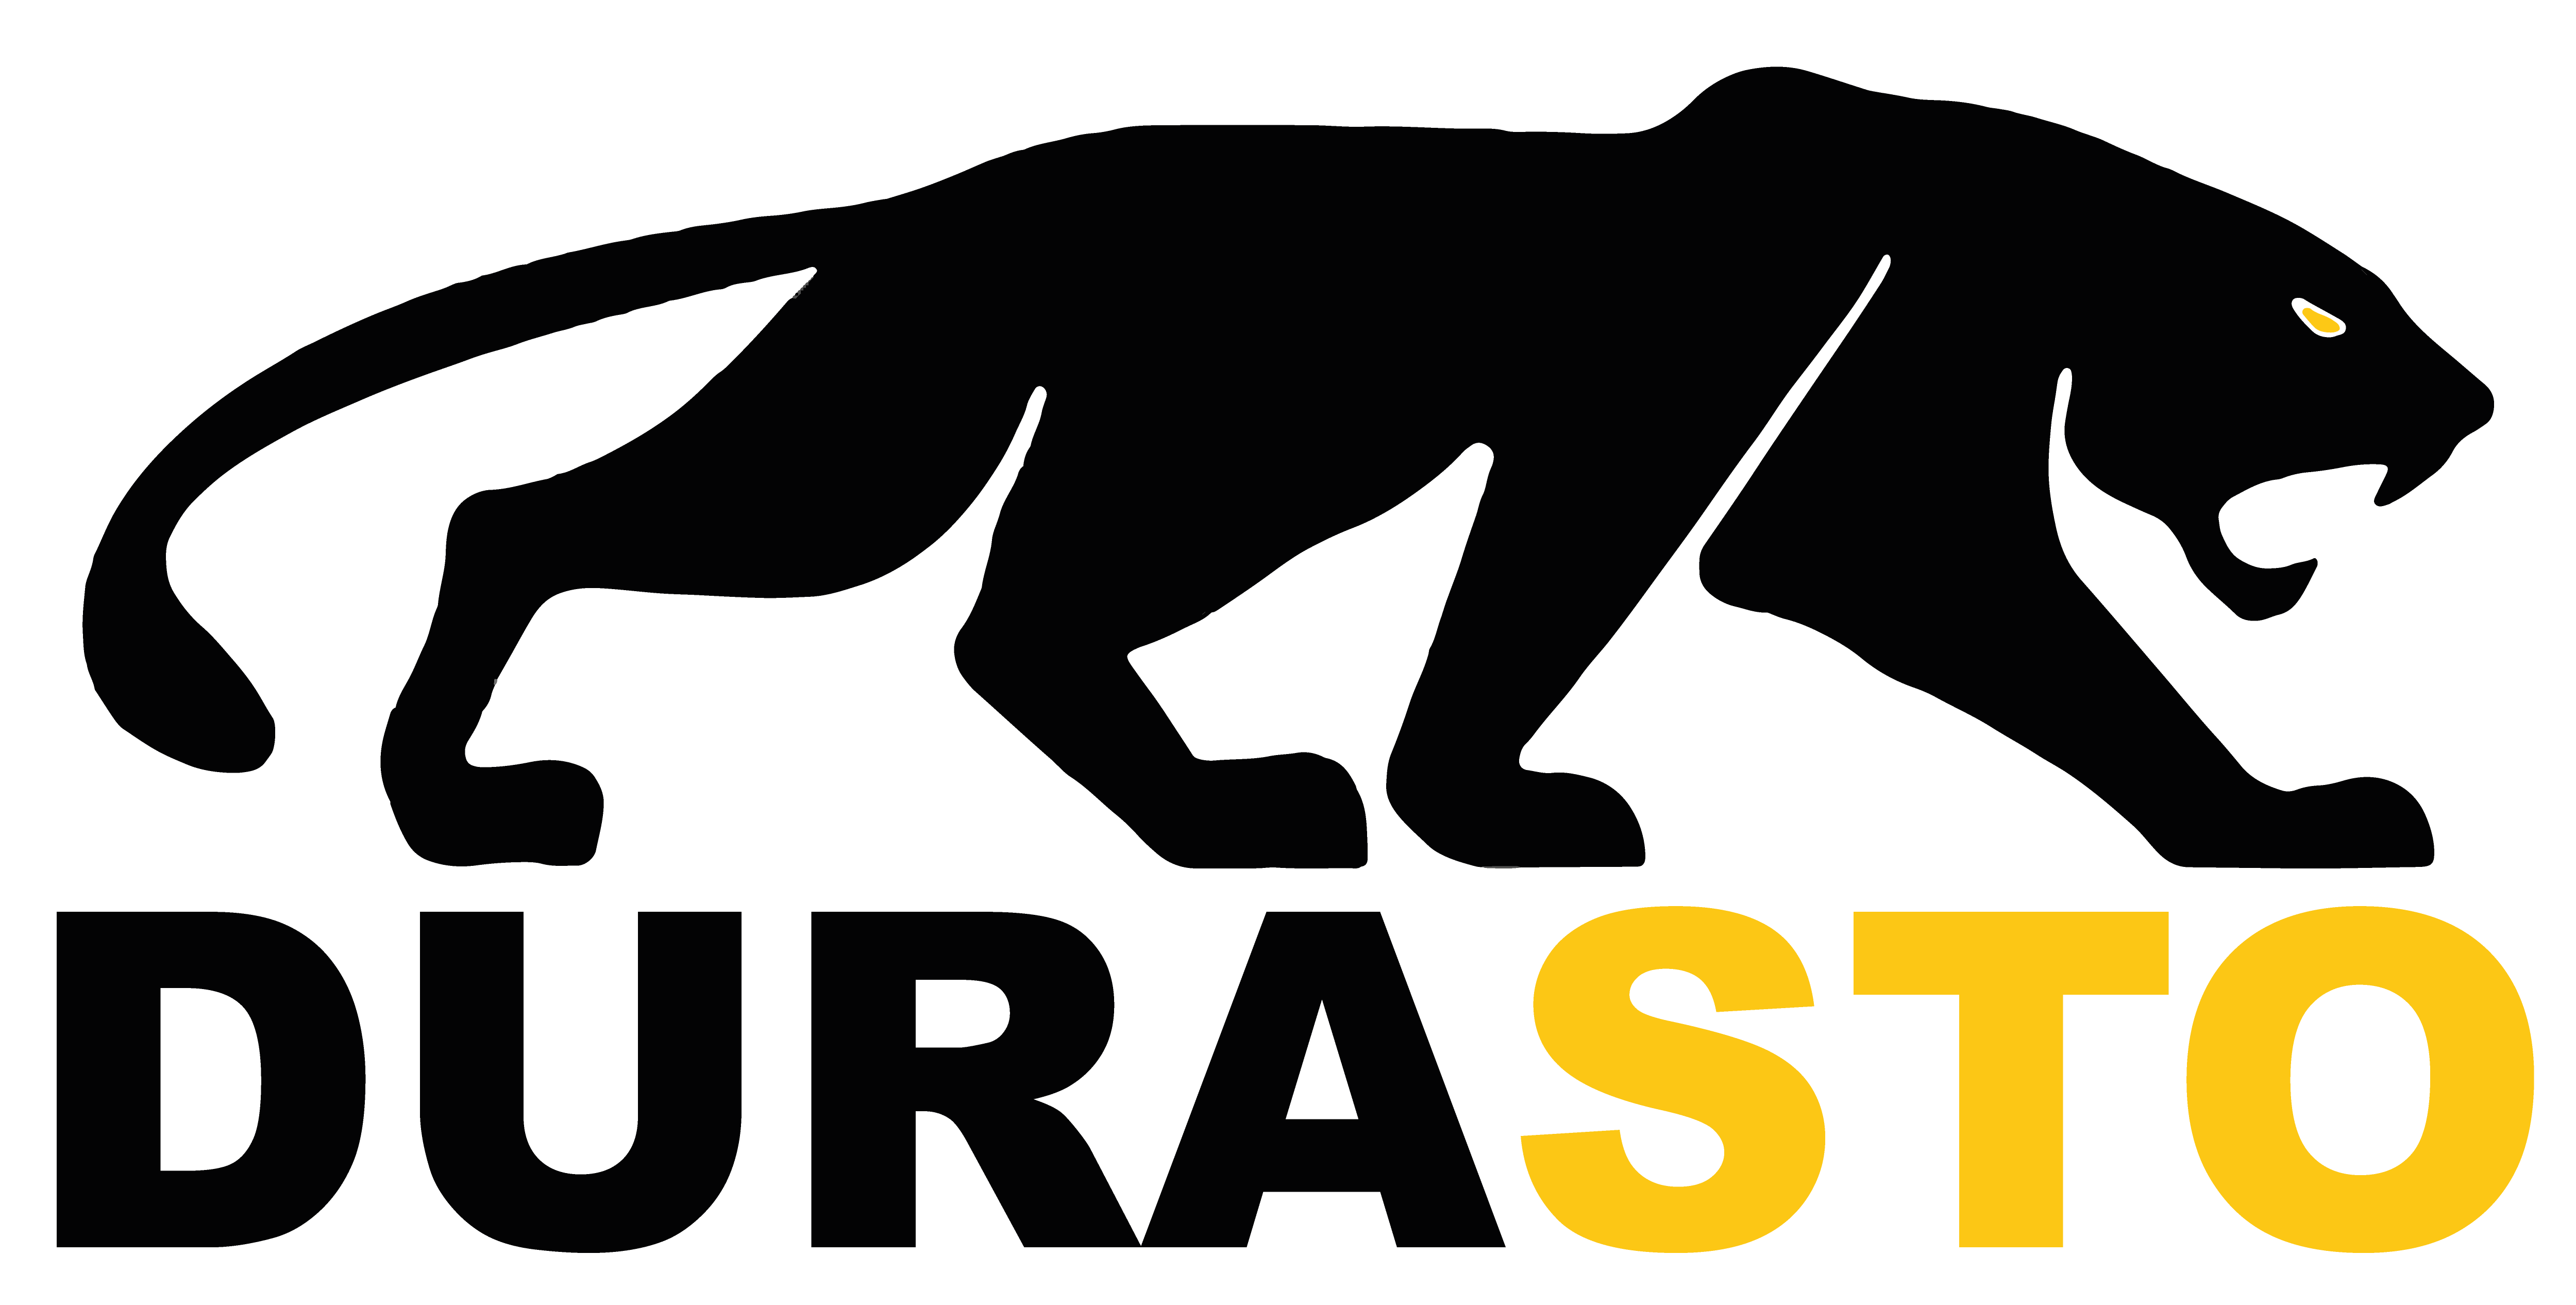 DuraSto Ltd.